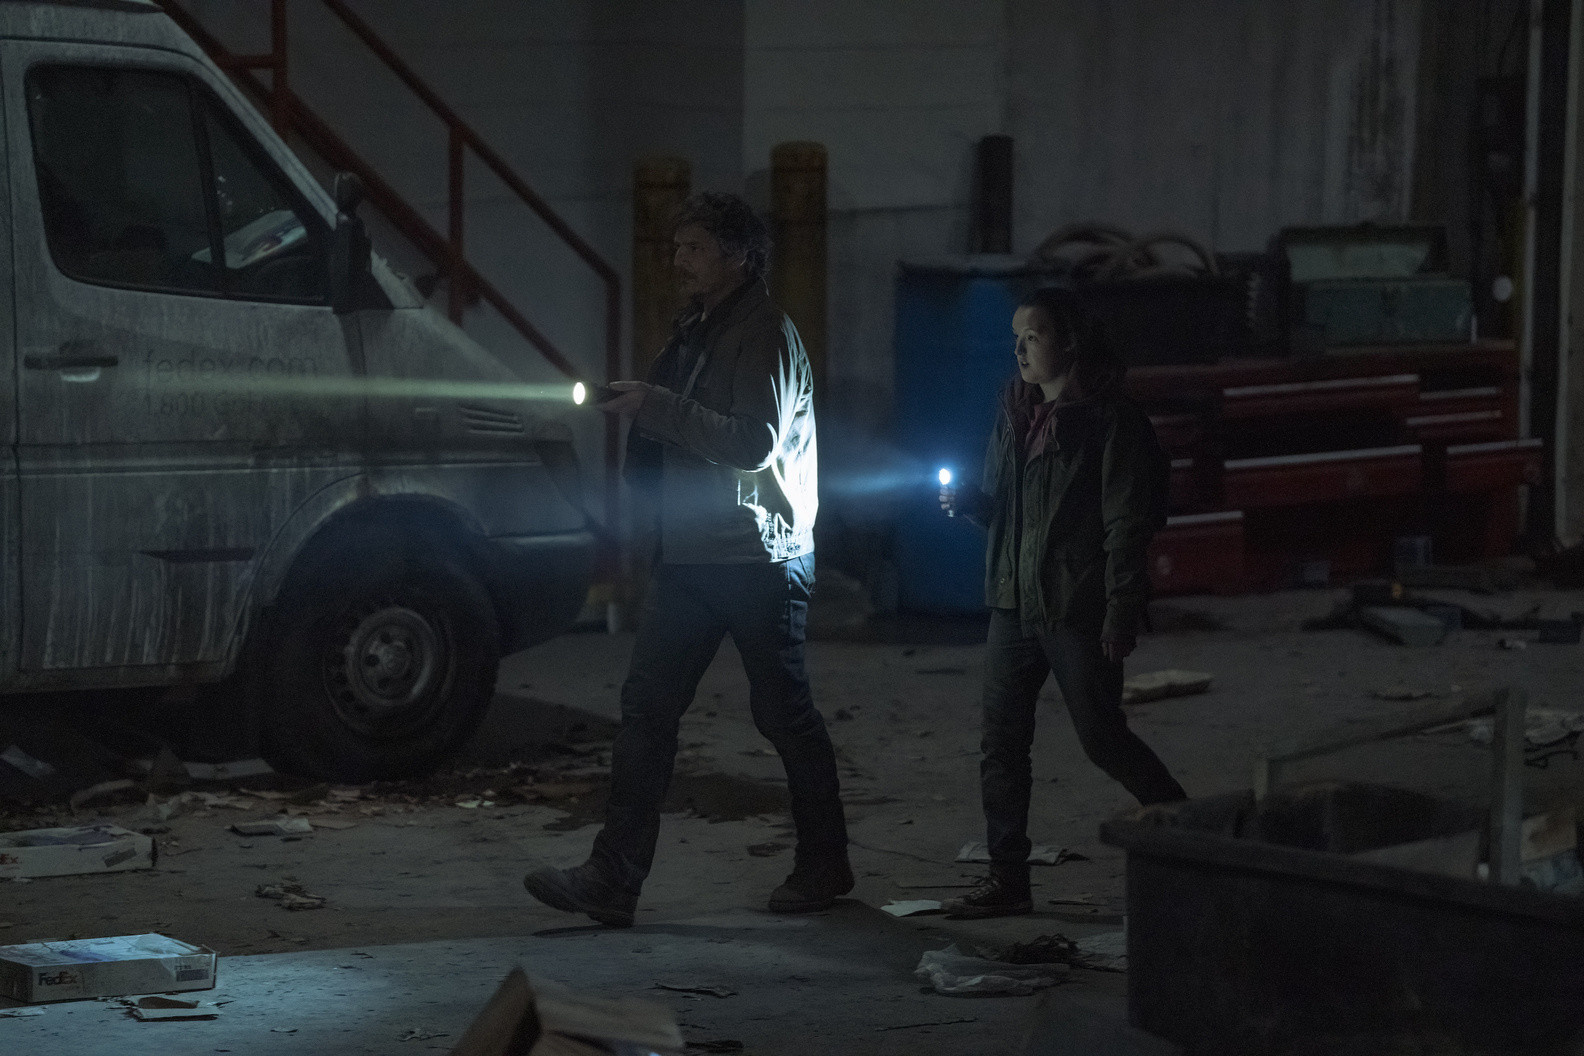 The Last of Us - Episódio 5 teve estreia antecipada; Confira a